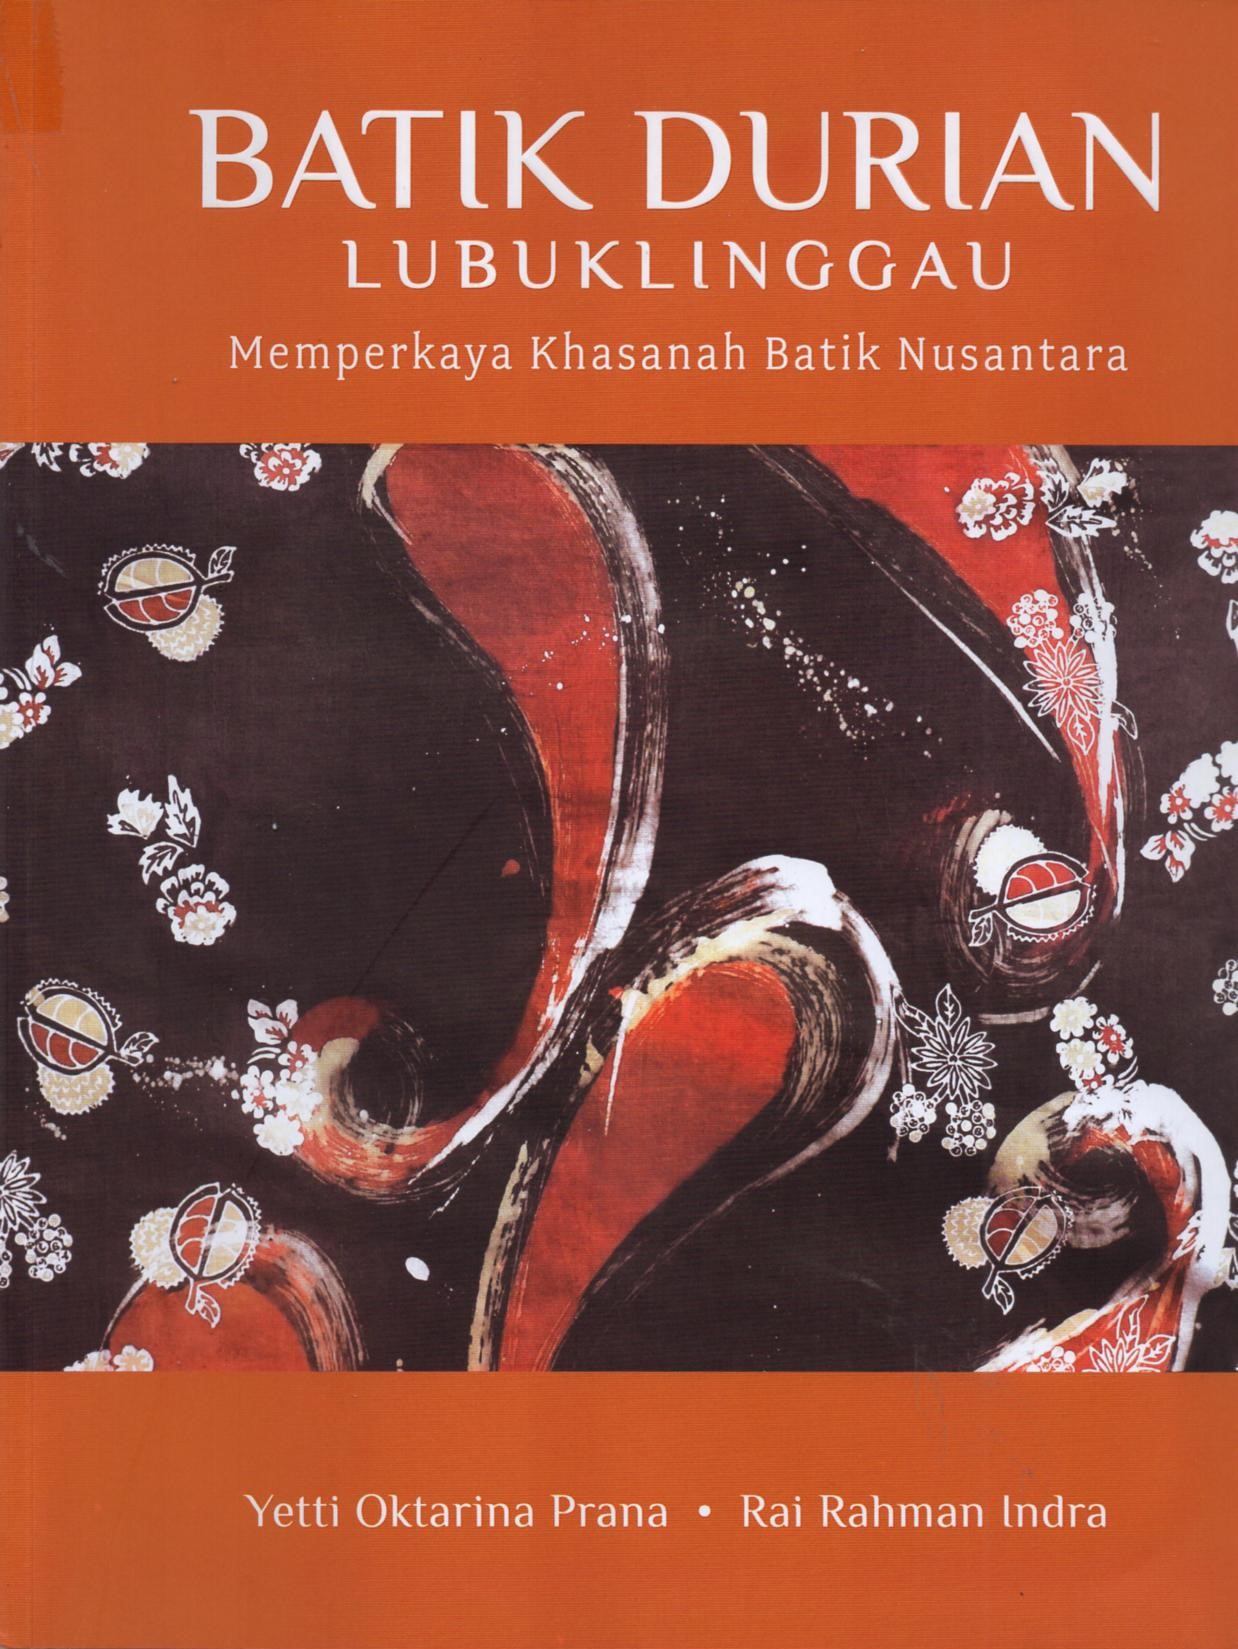 Batik Durian Lubuklinggau memperkaya khasah batik nusantara : perjalanan satu dekade (2013-2023) batik durian Lubuklinggau dalam memperkaya khasanah kain batik nusantara dengan eksploitasi motif durian